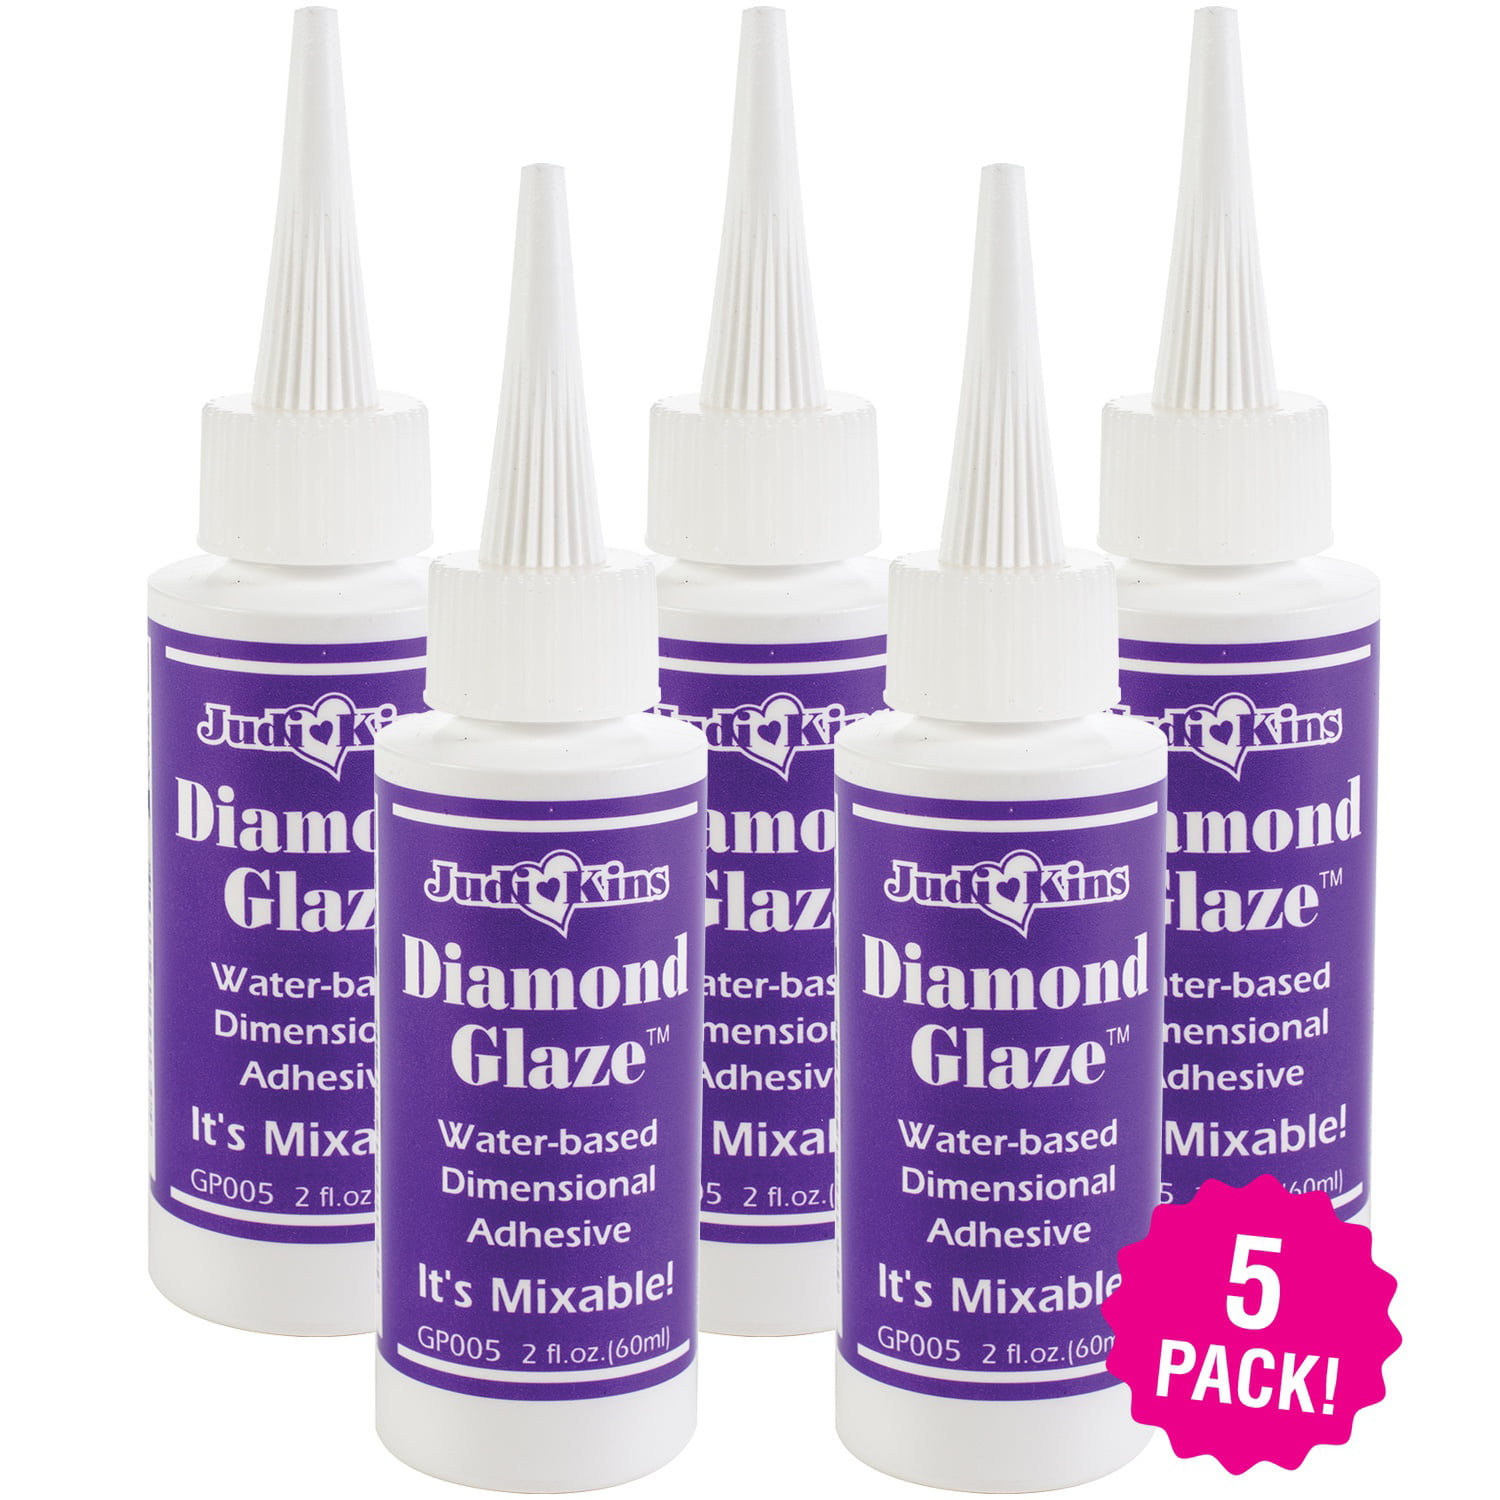 Multipack of 5 - Judikins Diamond Glaze Dimensional Adhesive 2oz-Precision  Tip